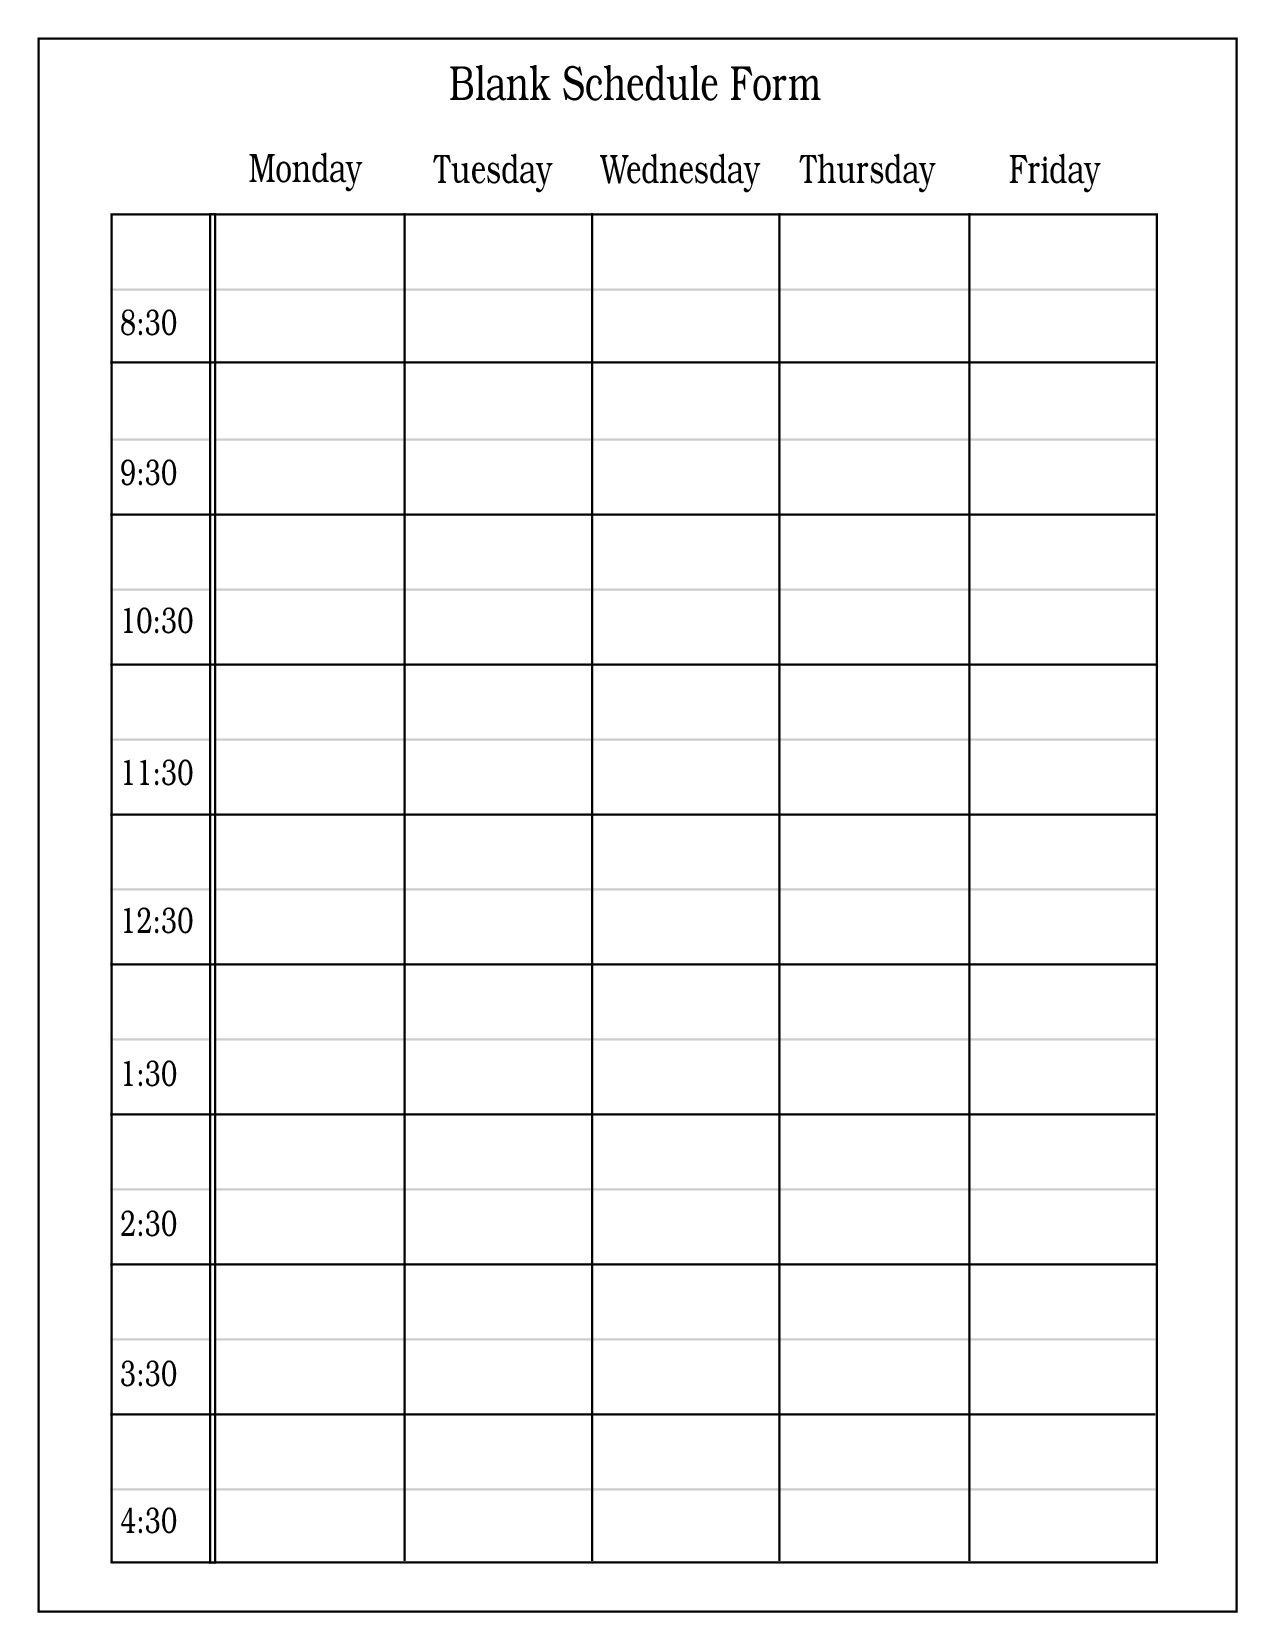 Employee Scheduling - Download A Free Employee Schedule 6 Day Calendar Template